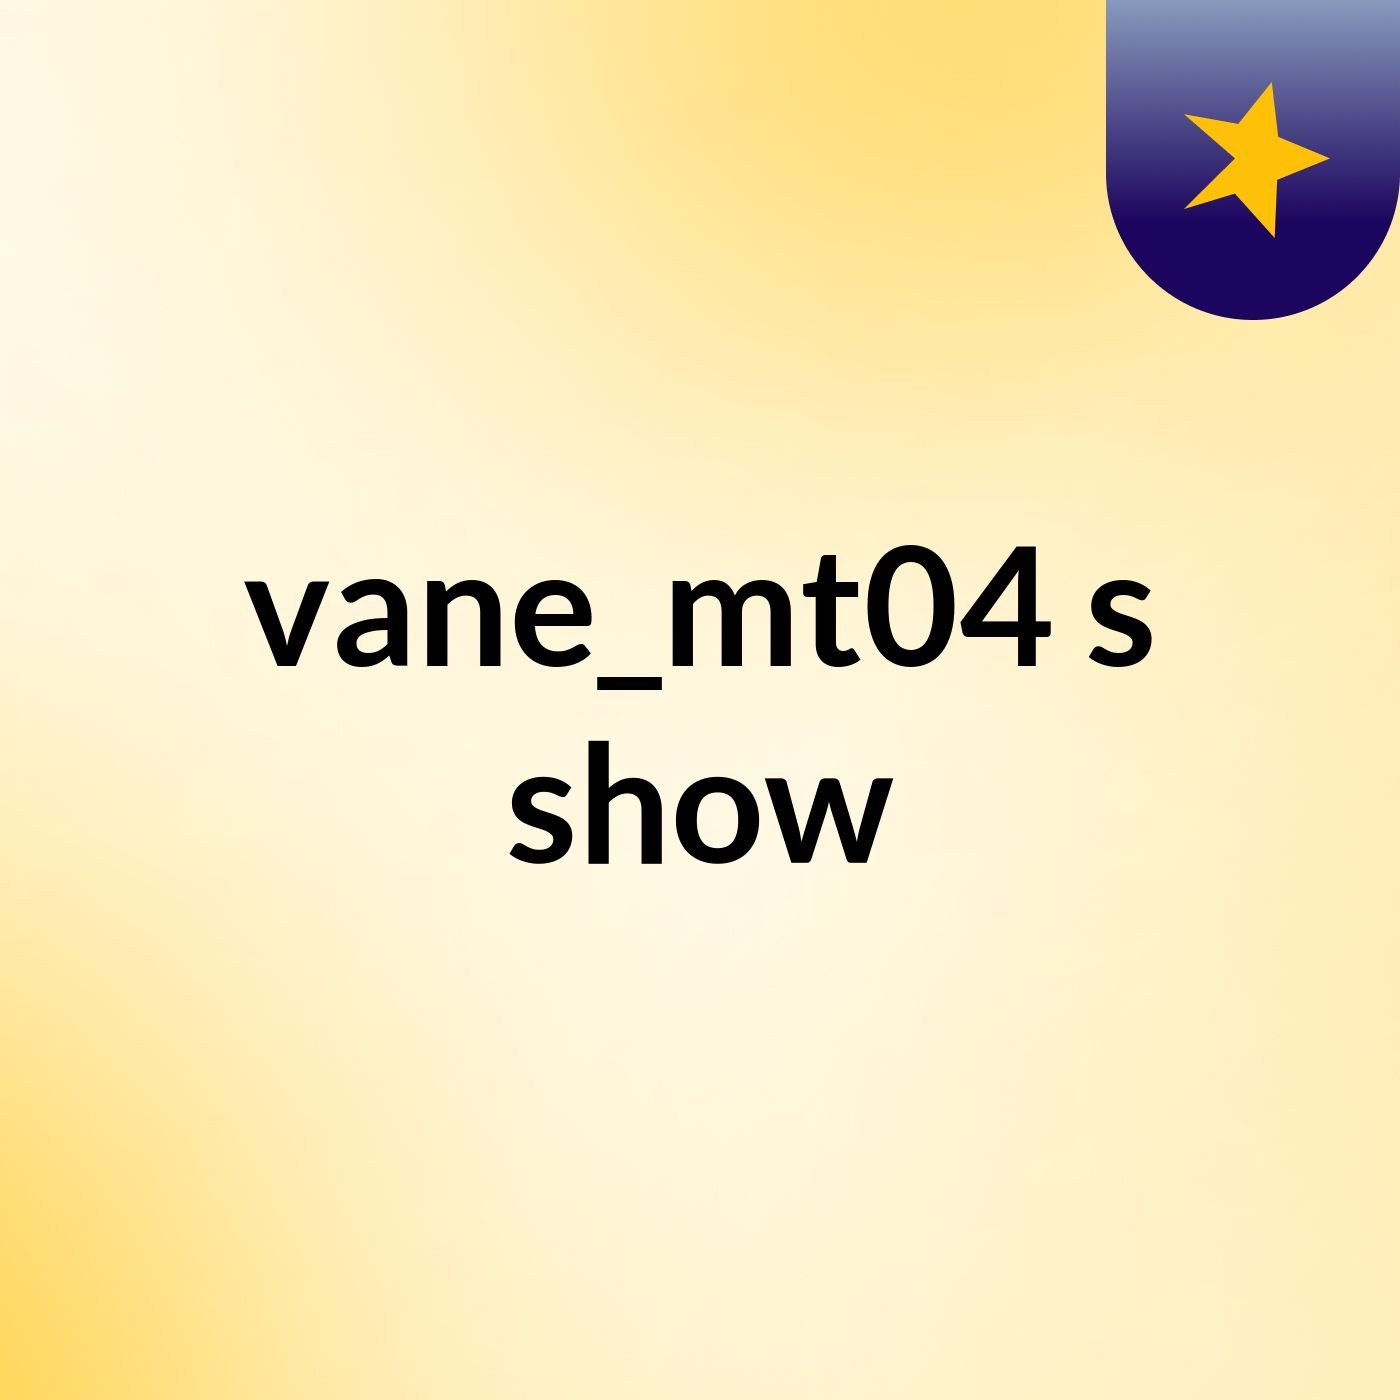 vane_mt04's show